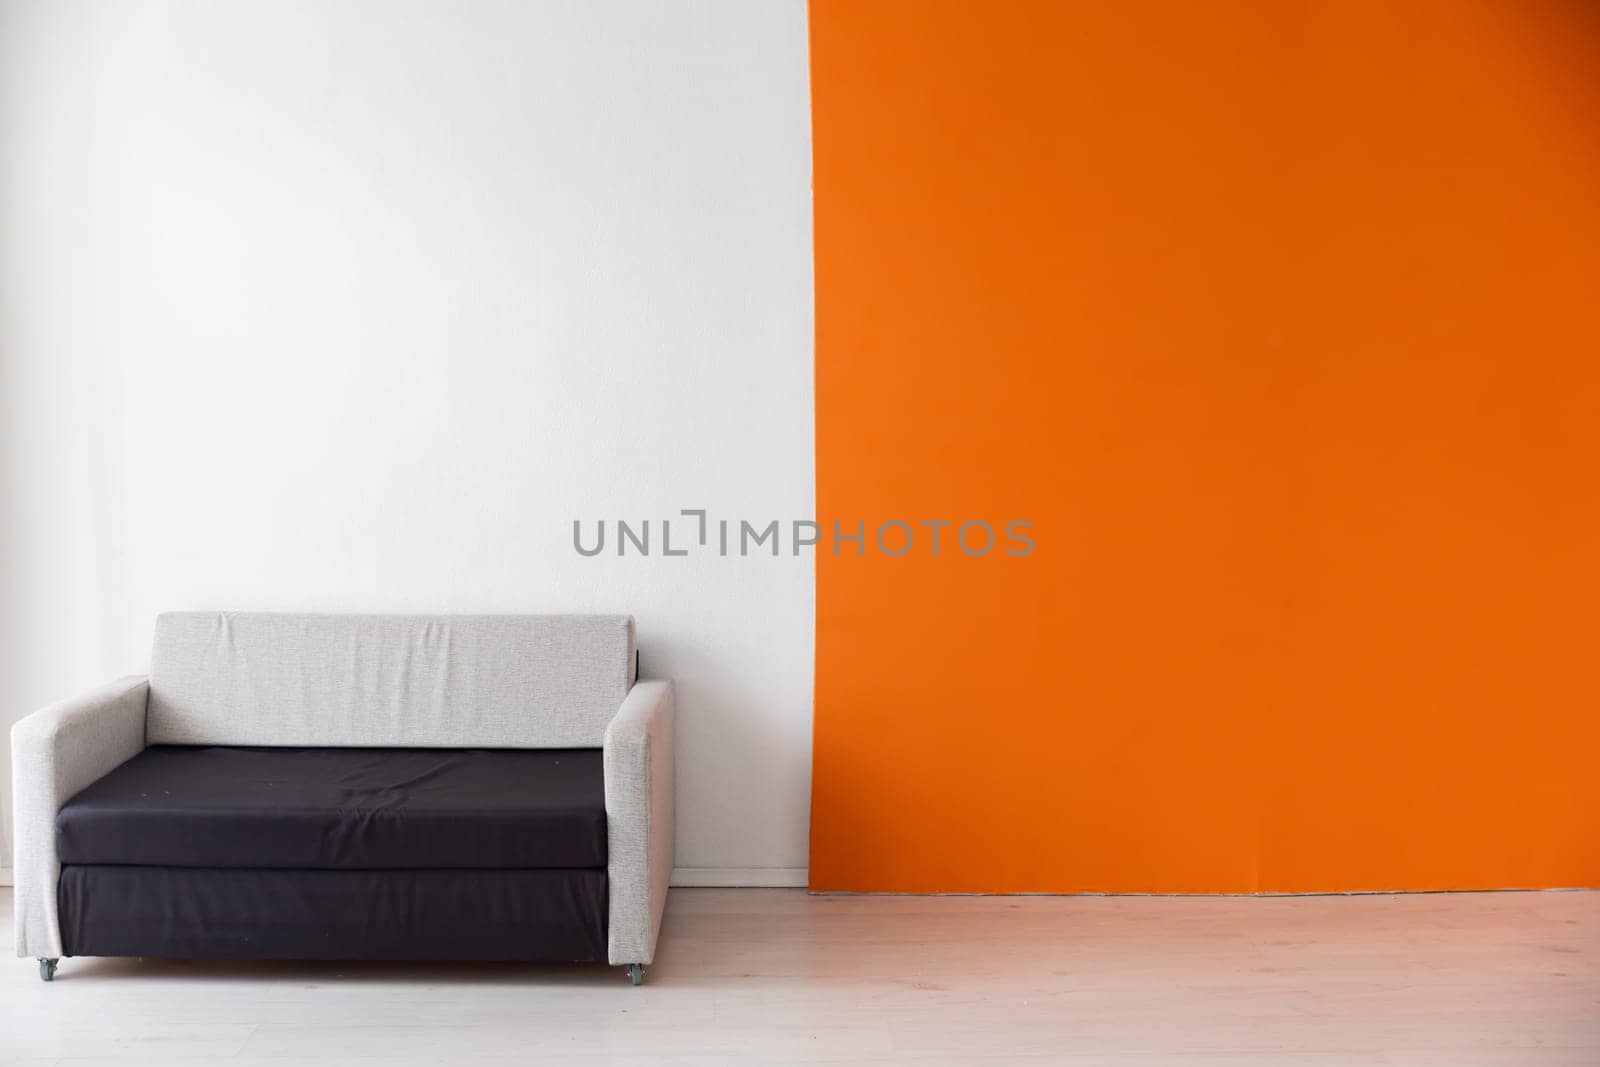 sofa near the white orange wall in a bright room by Simakov